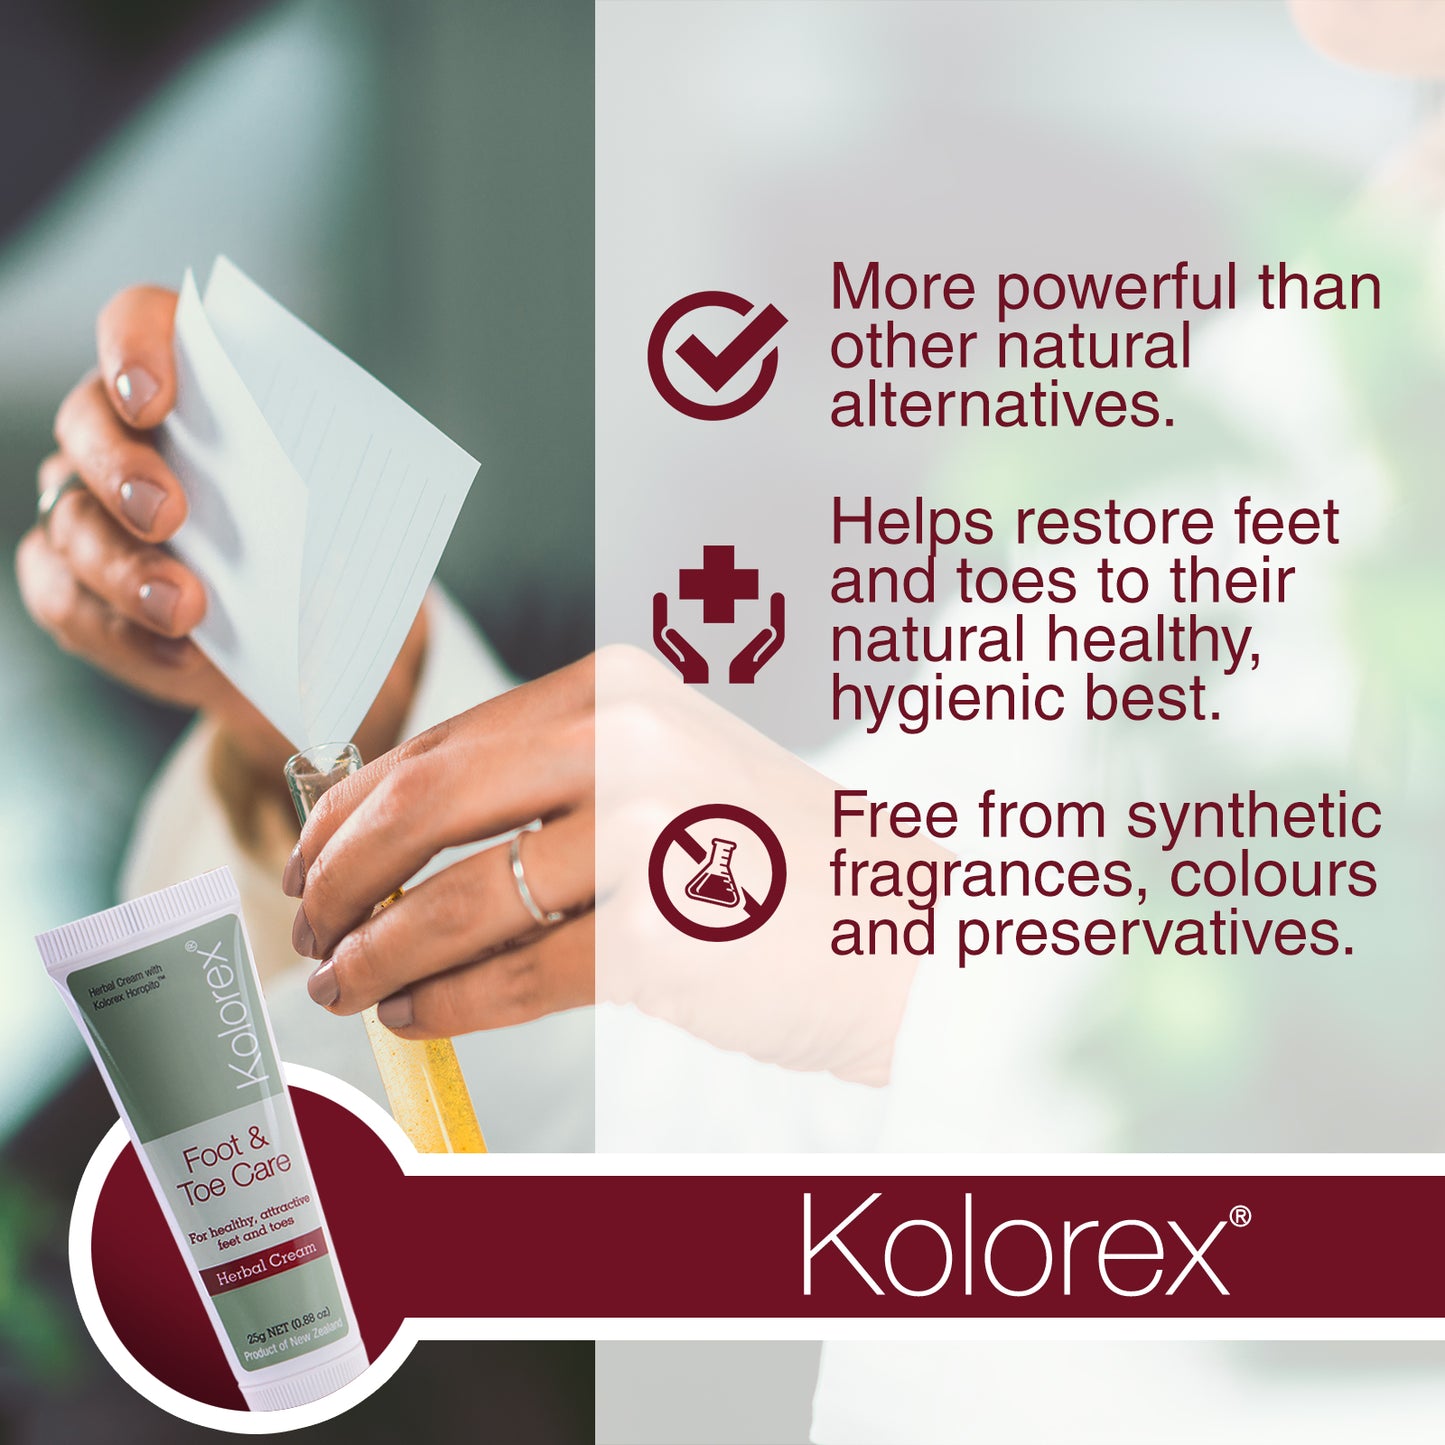 Kolorex Foot and Toe Care